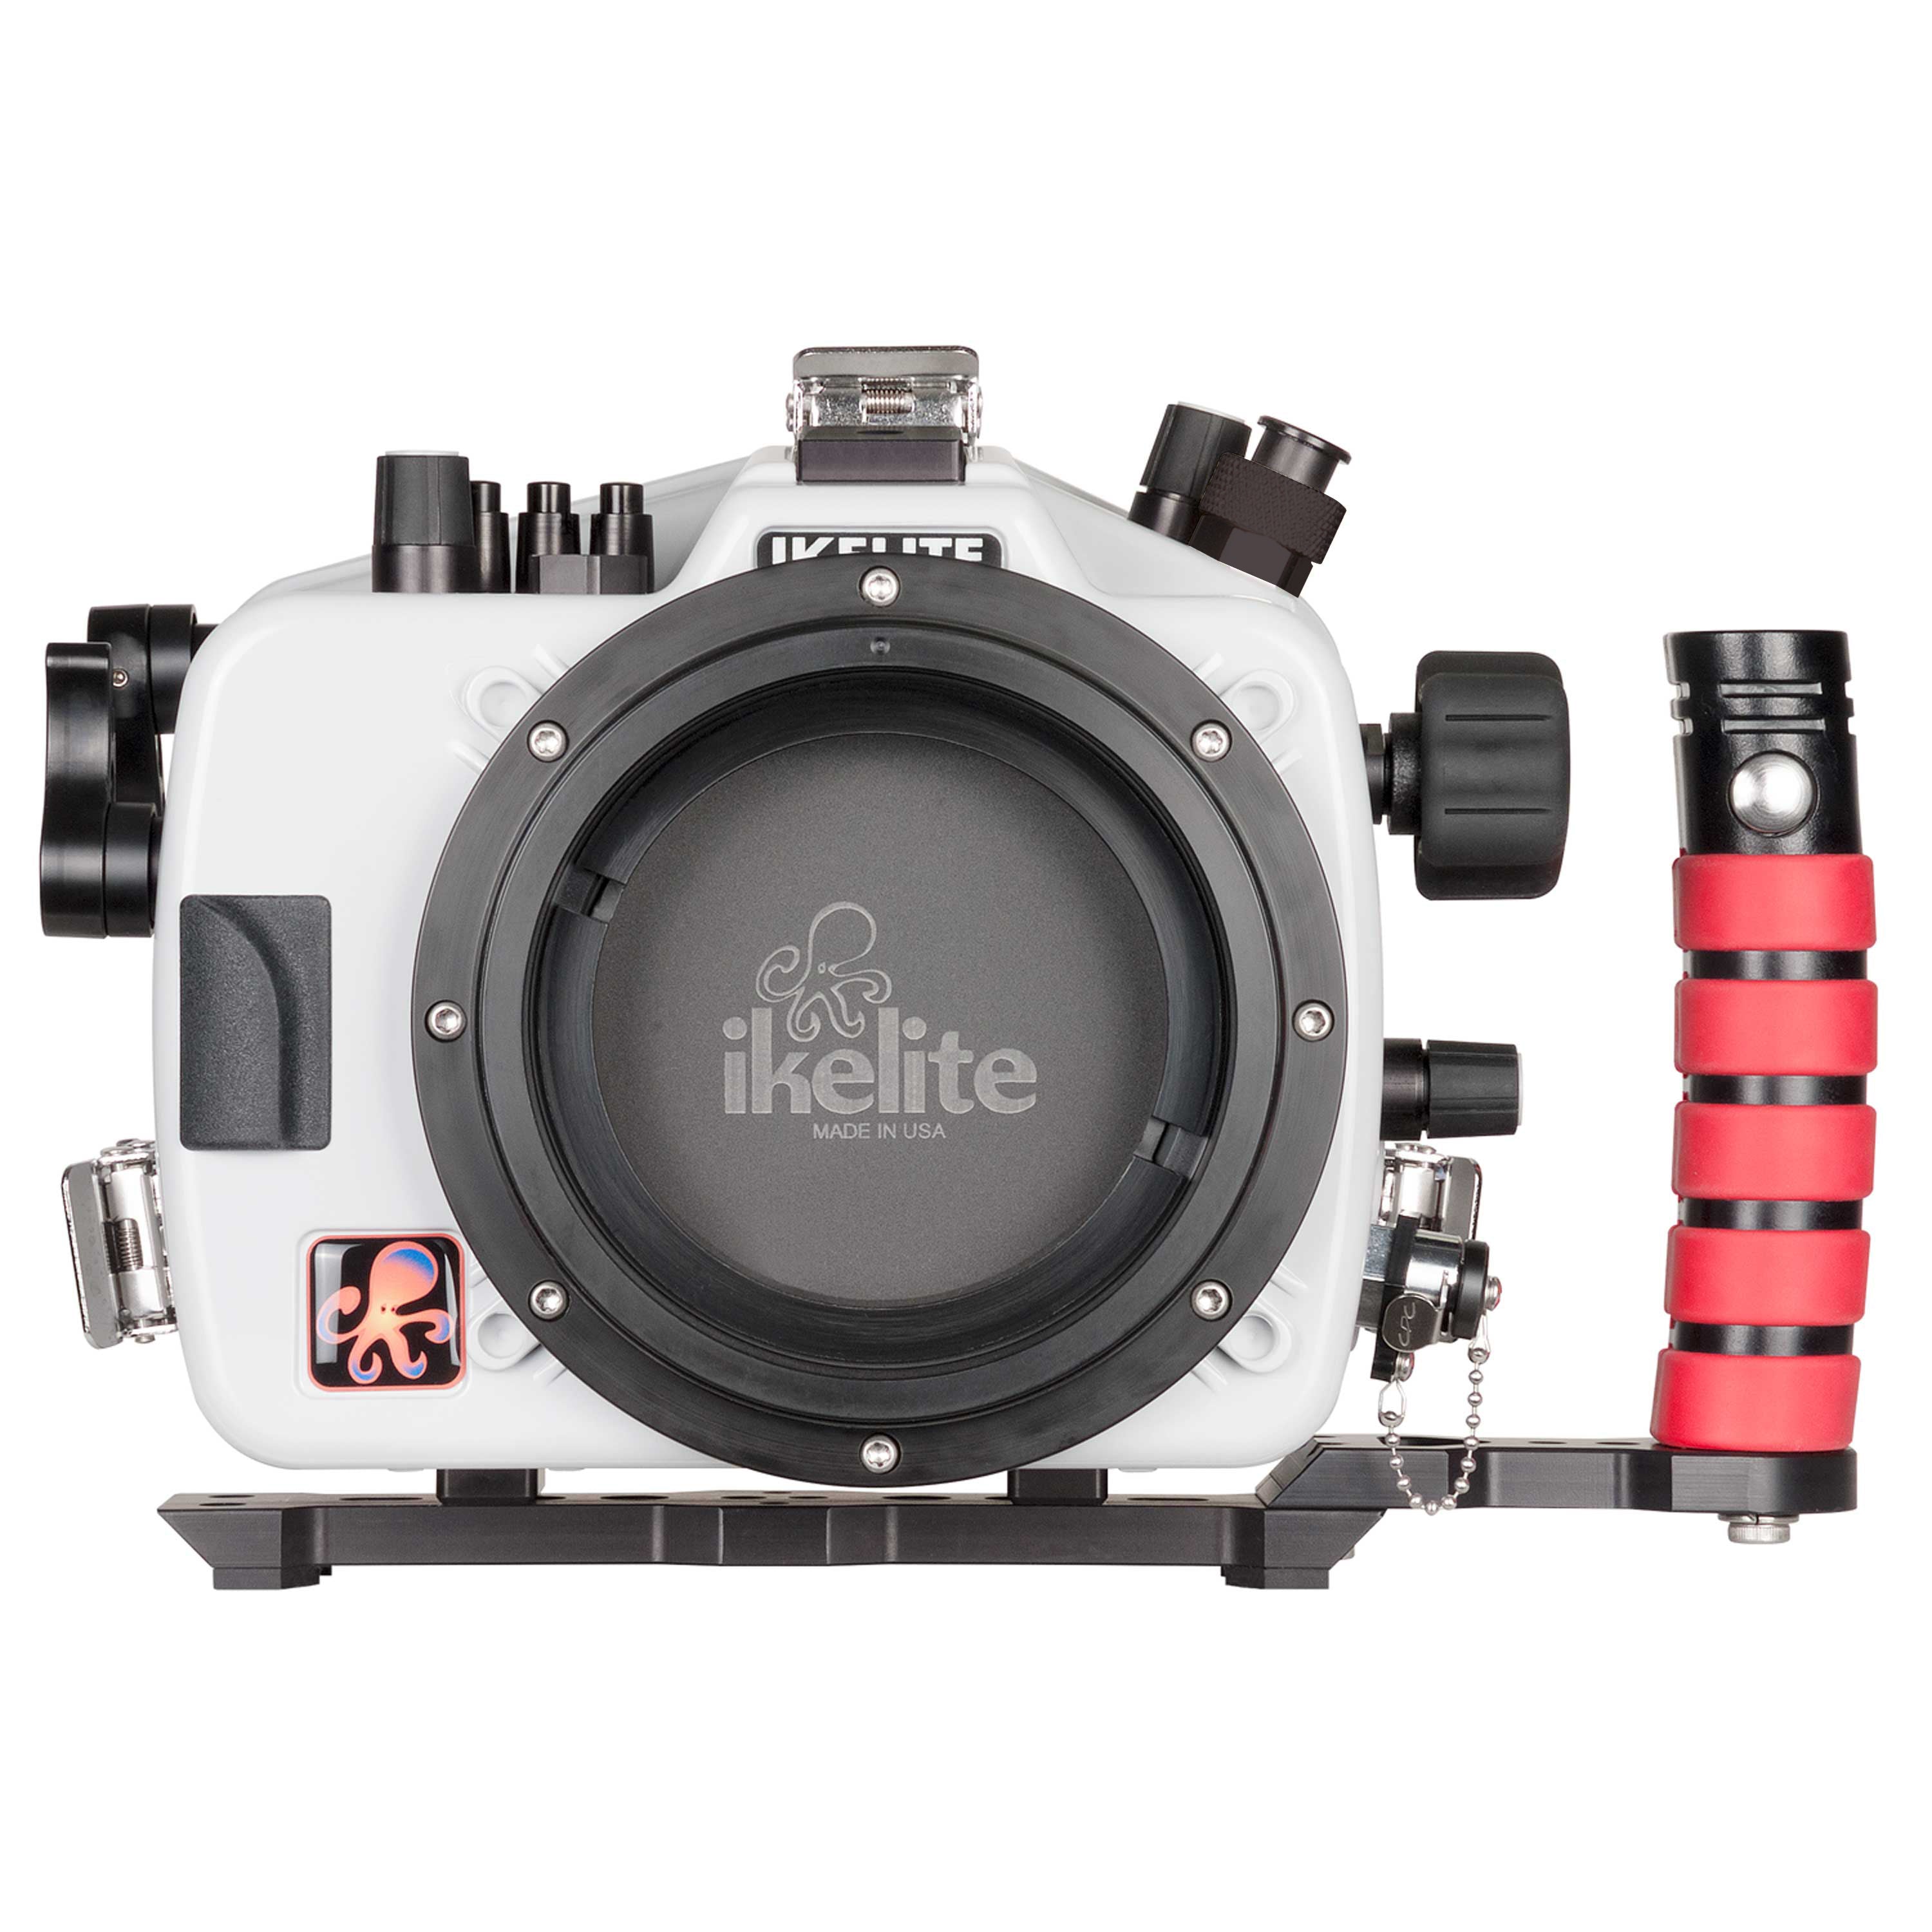 Ikelite 200DL Underwater Housing for Canon EOS 5D Mark III, 5D Mark IV, 5DS, 5DS R DSLR Cameras